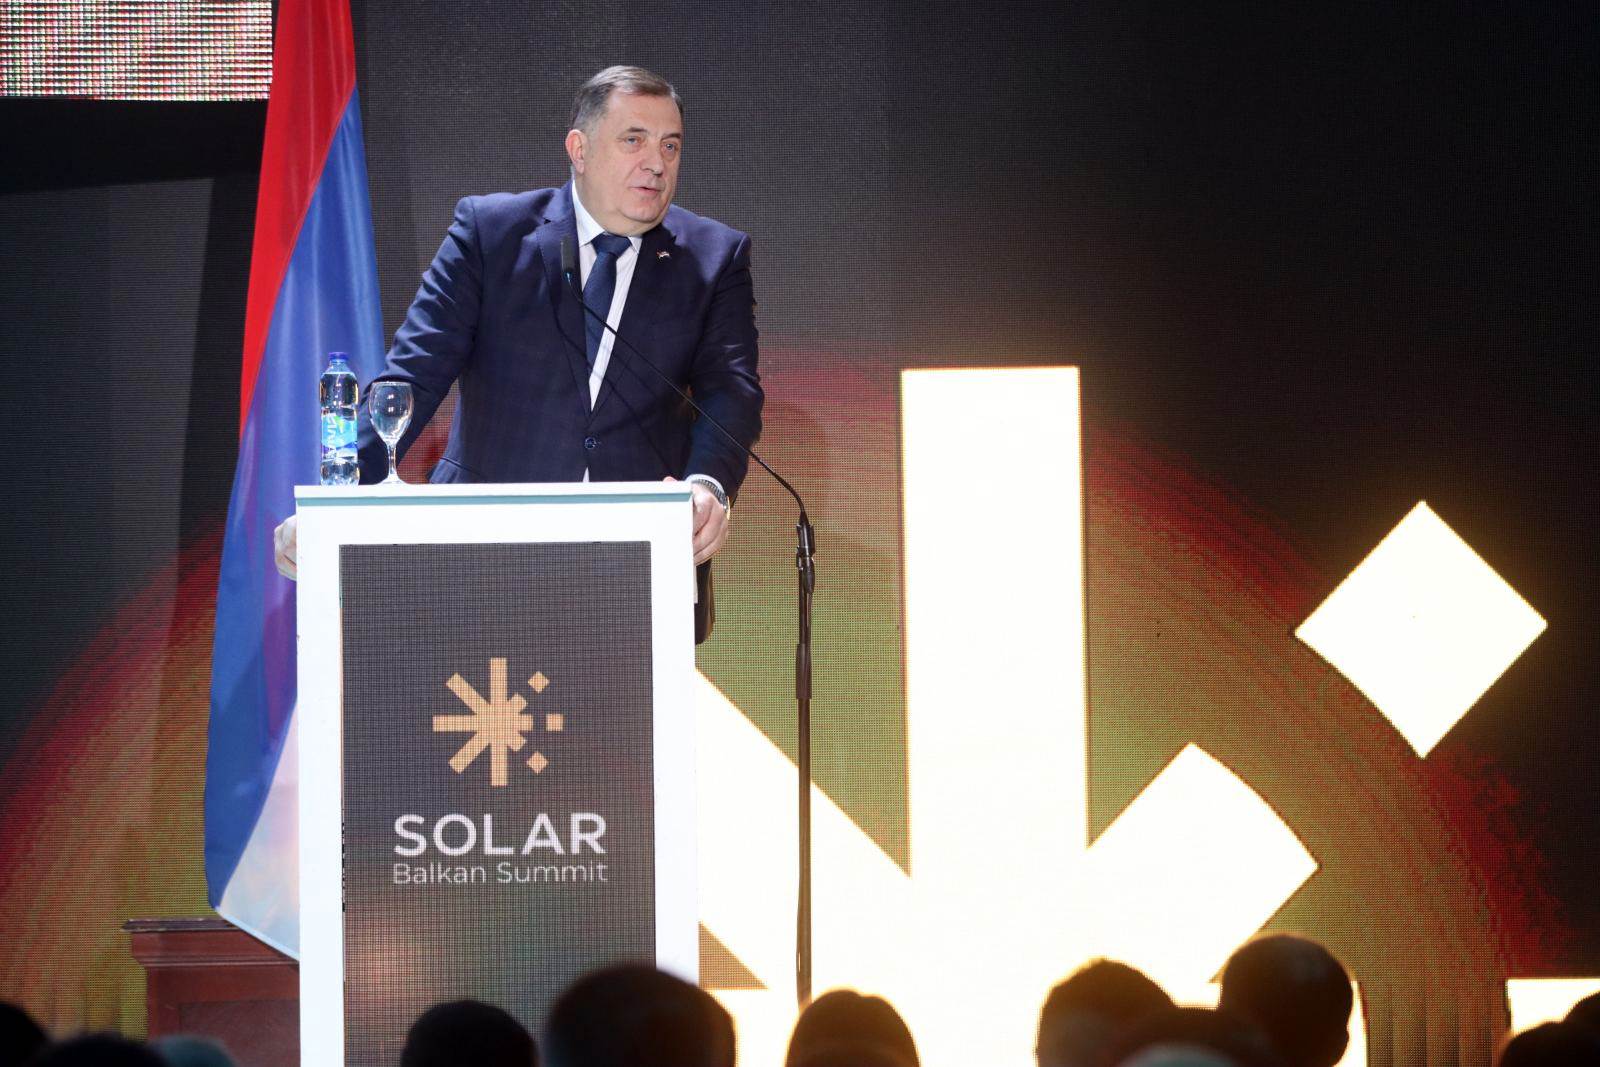  Počeo Balkan solar samit 